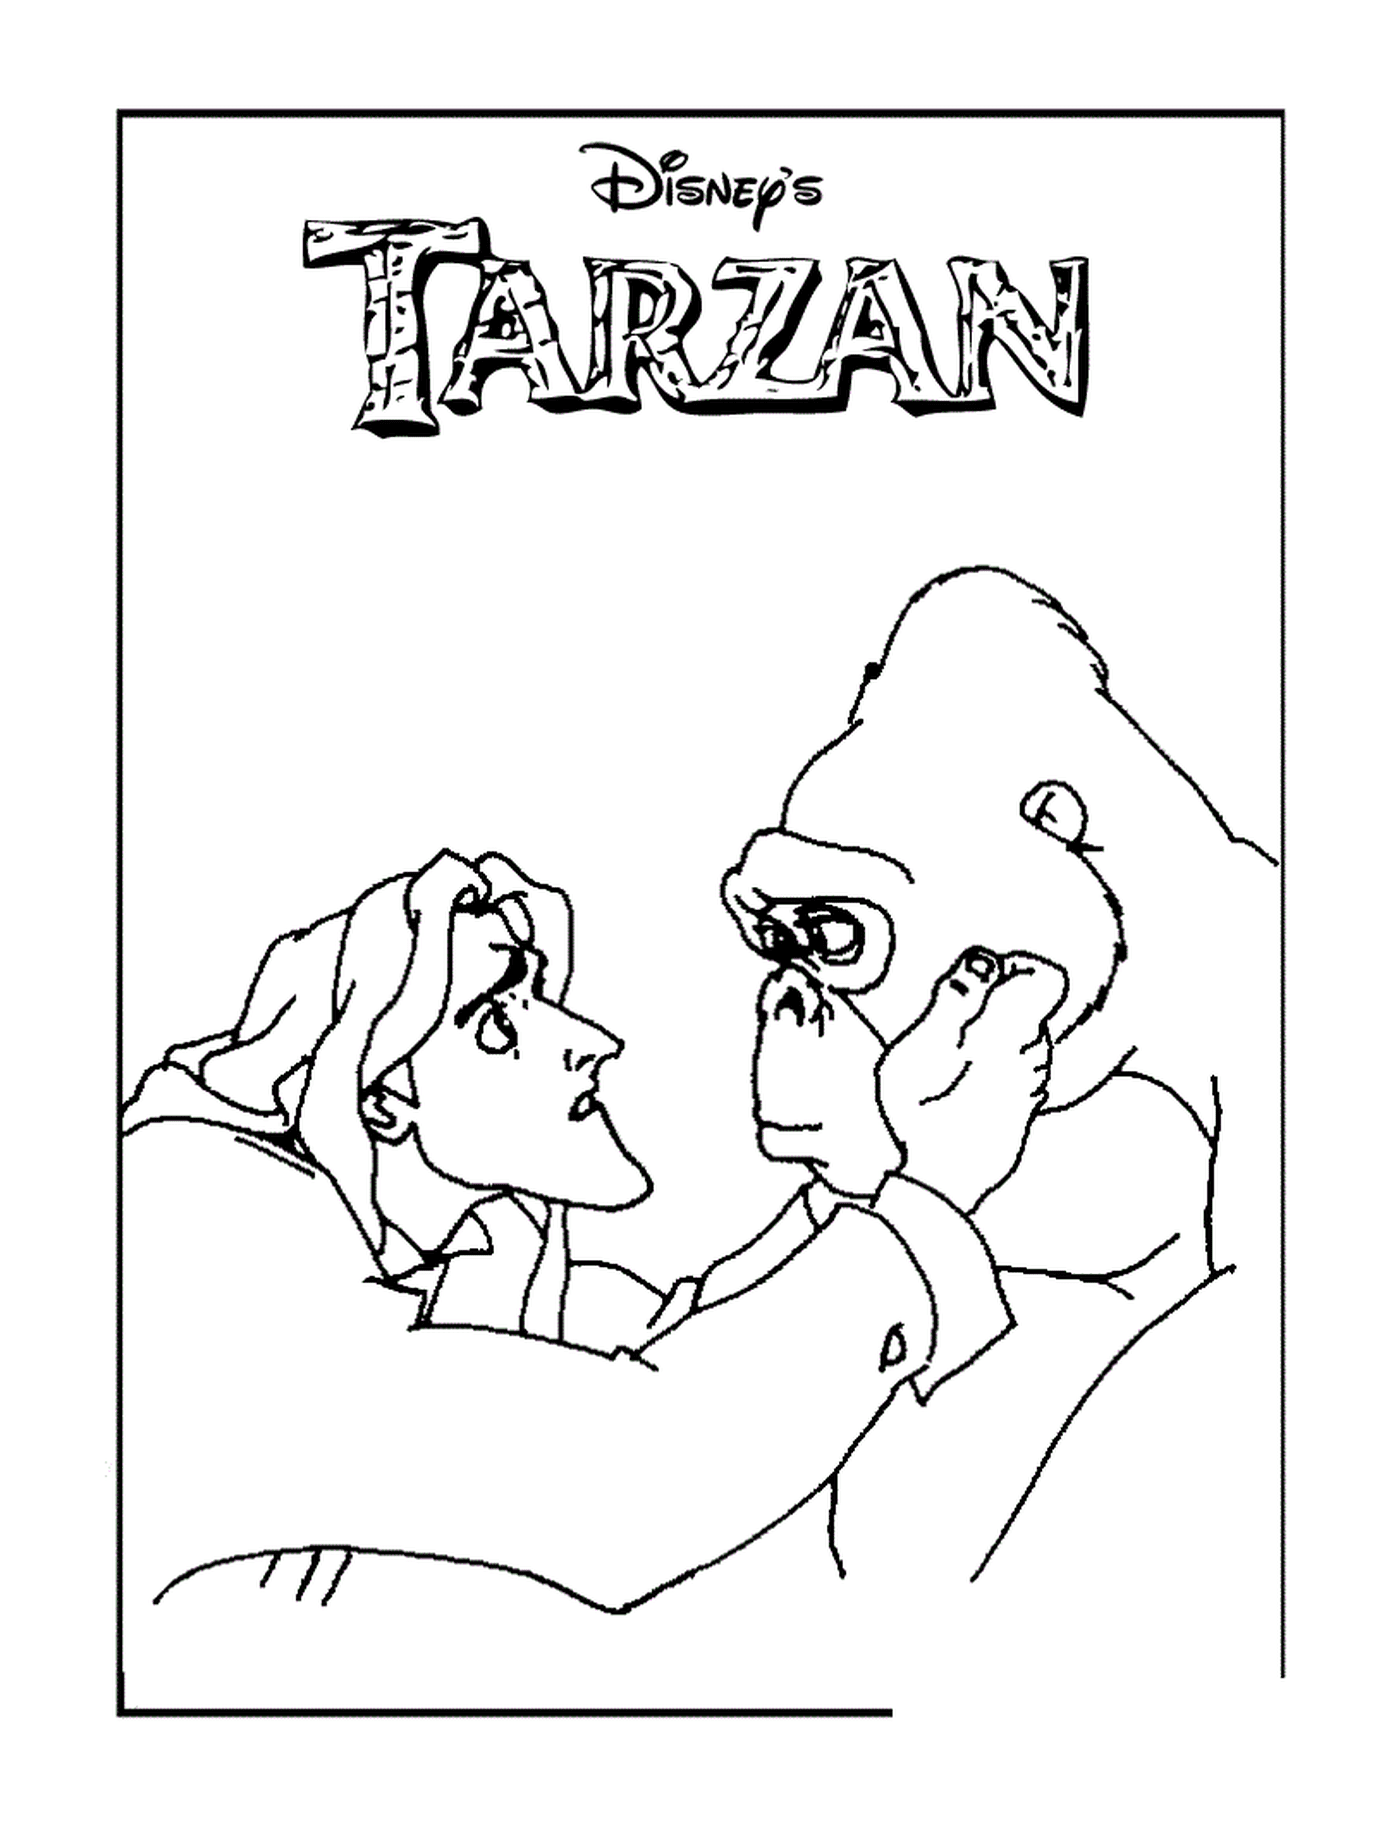  Tarzan and gorilla 